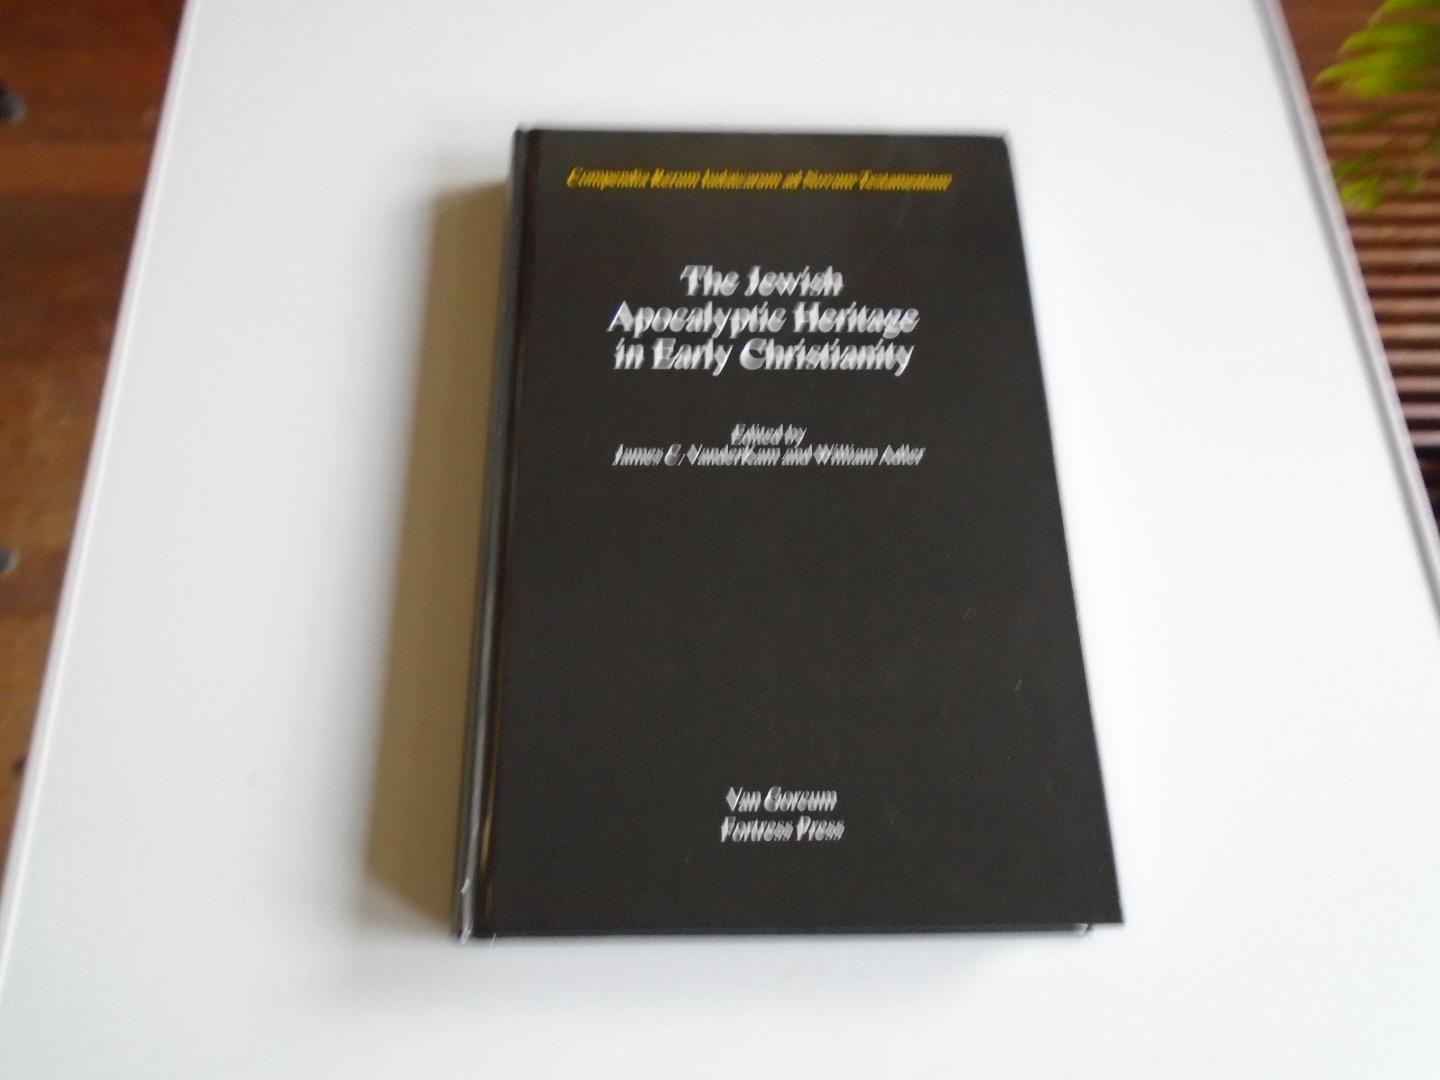 Vanderkam, James C. / William Adler - The Jewish Apocalyptic Heritage in Early Christianity